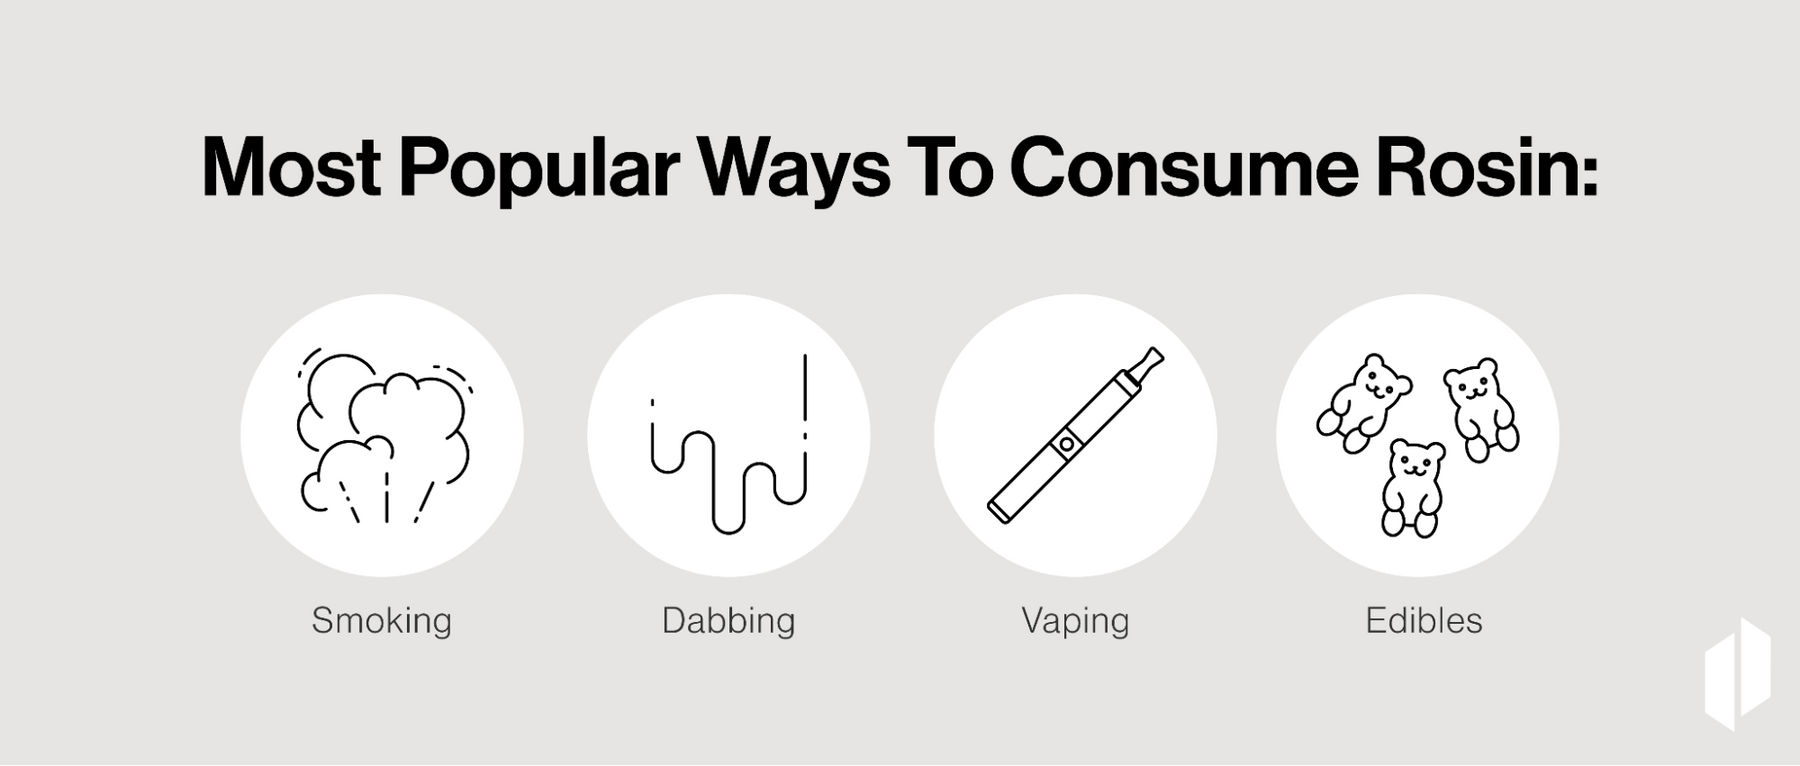 Most popular ways to consume rosin: smoking, dabbing, vaping, edibles